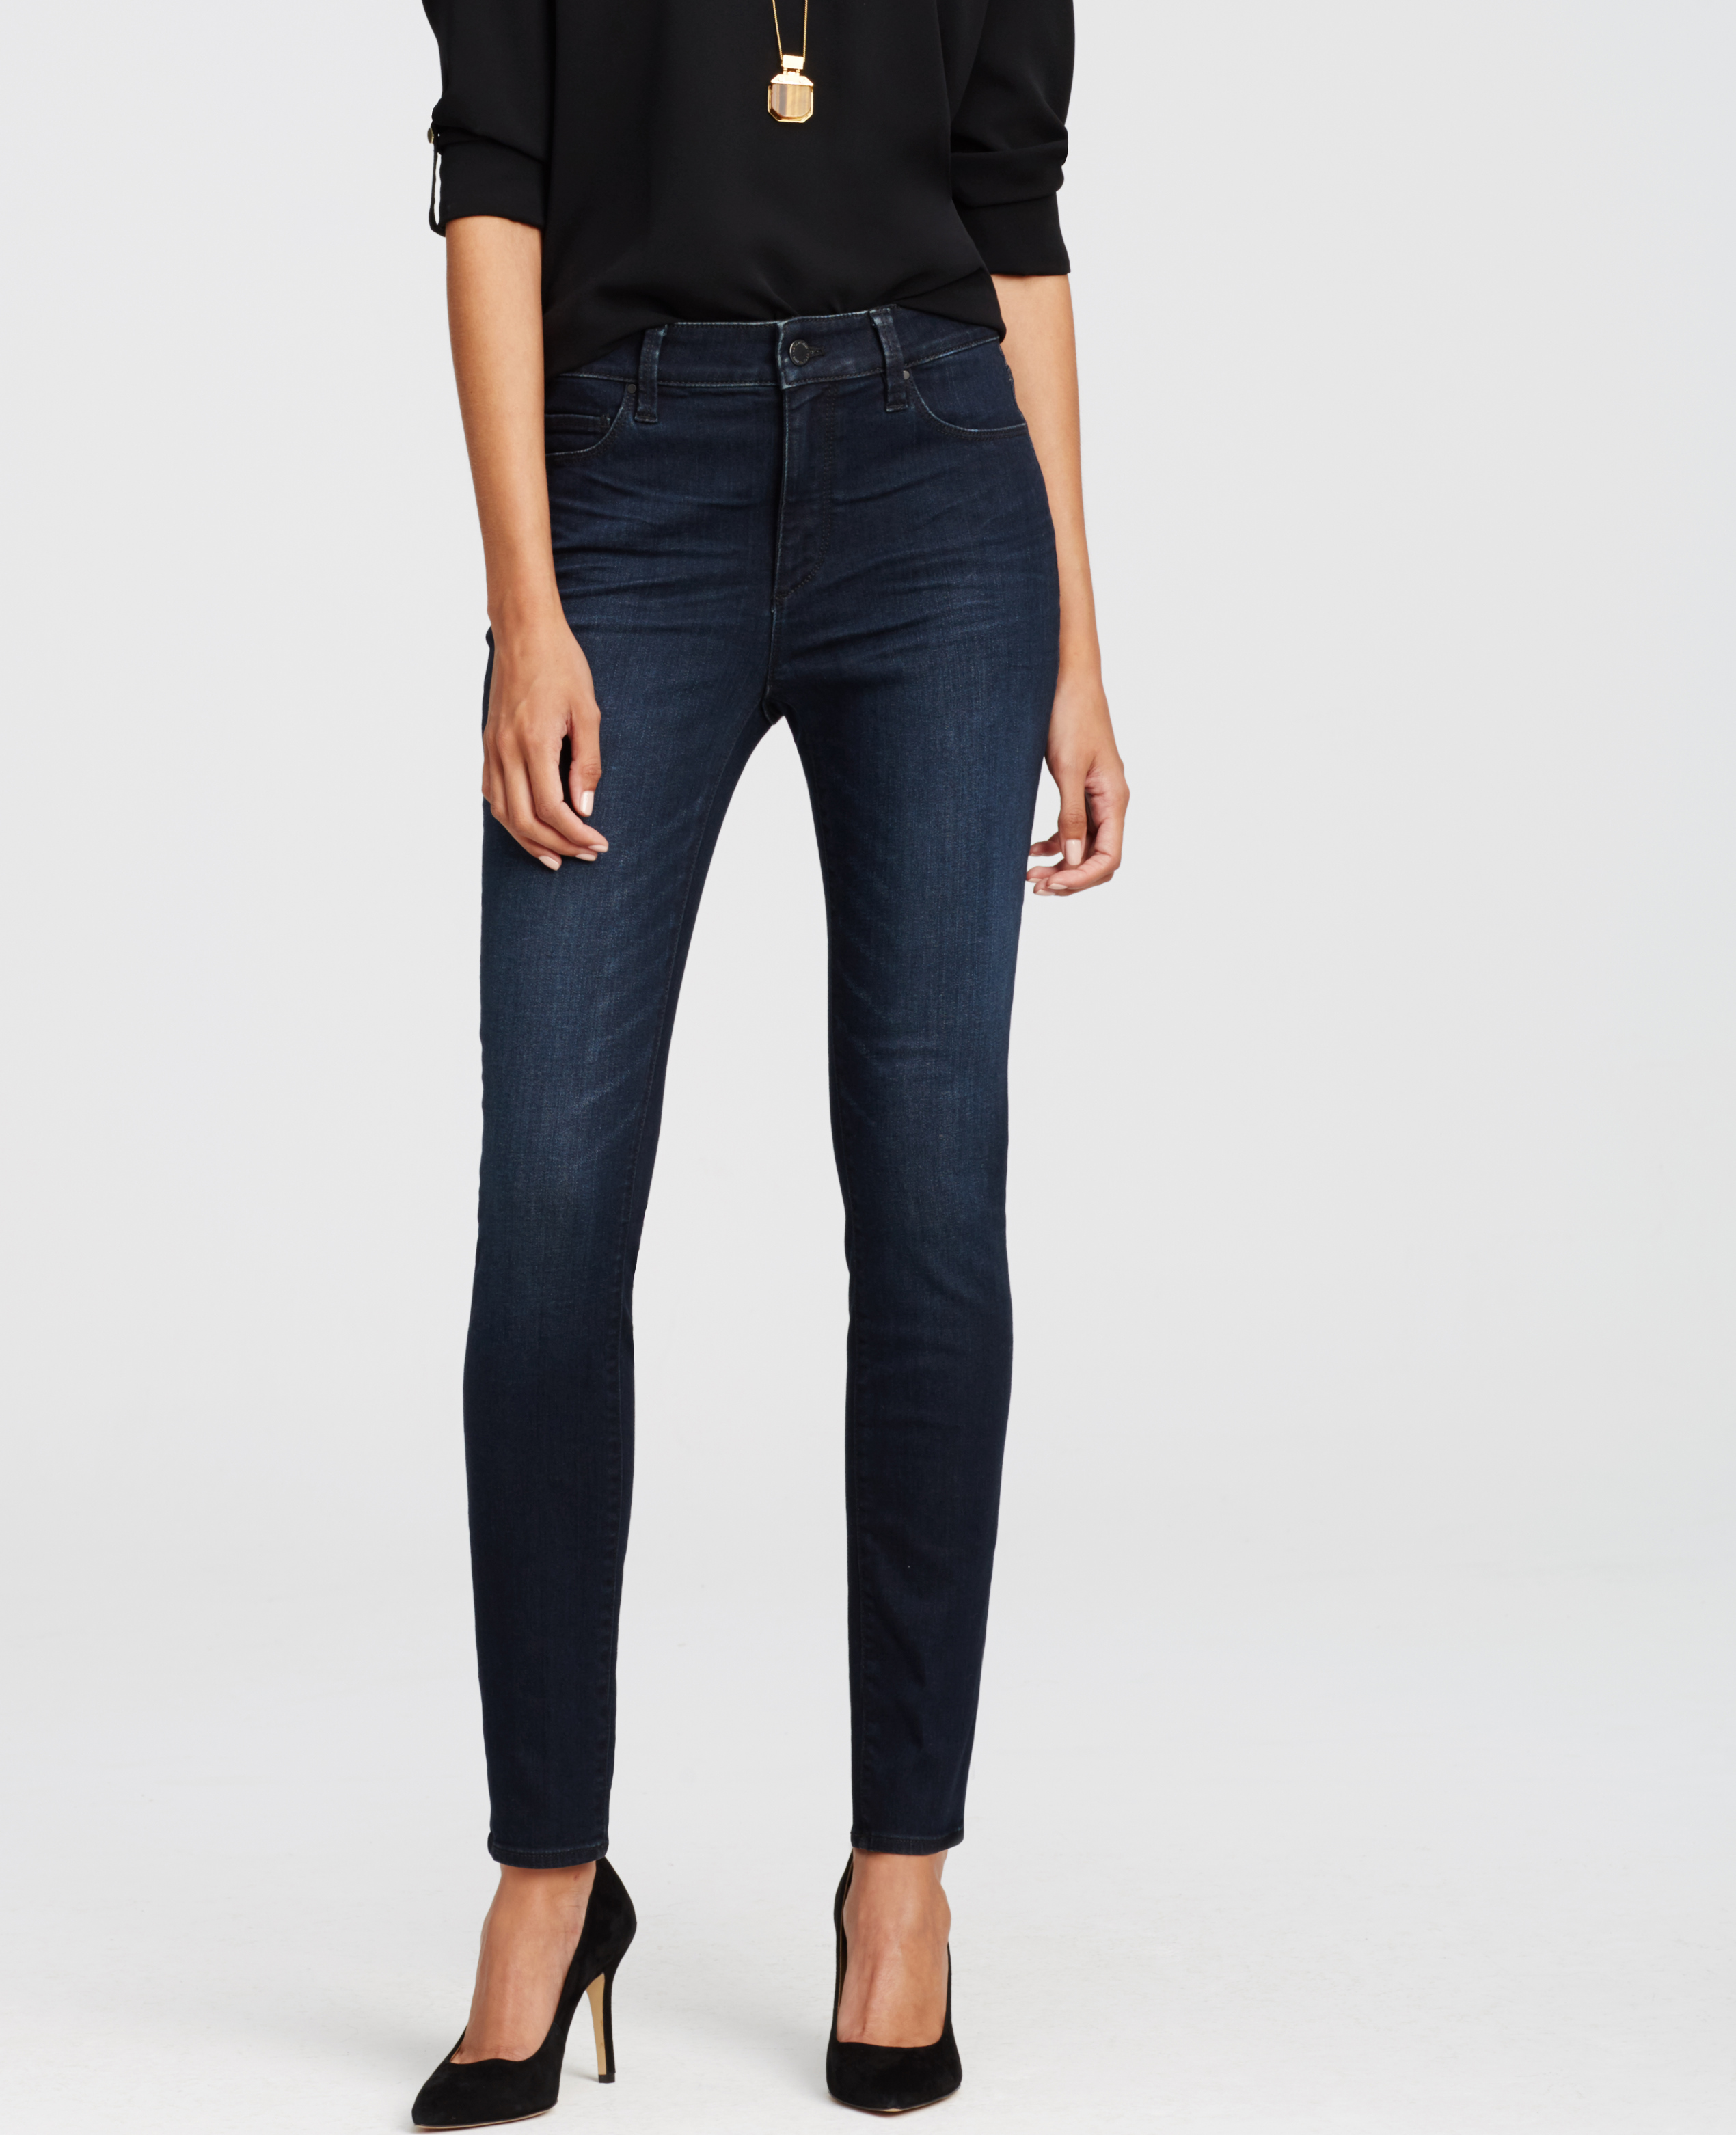 Lyst - Ann taylor Tall Curvy Super Skinny High Rise Jeans in Blue